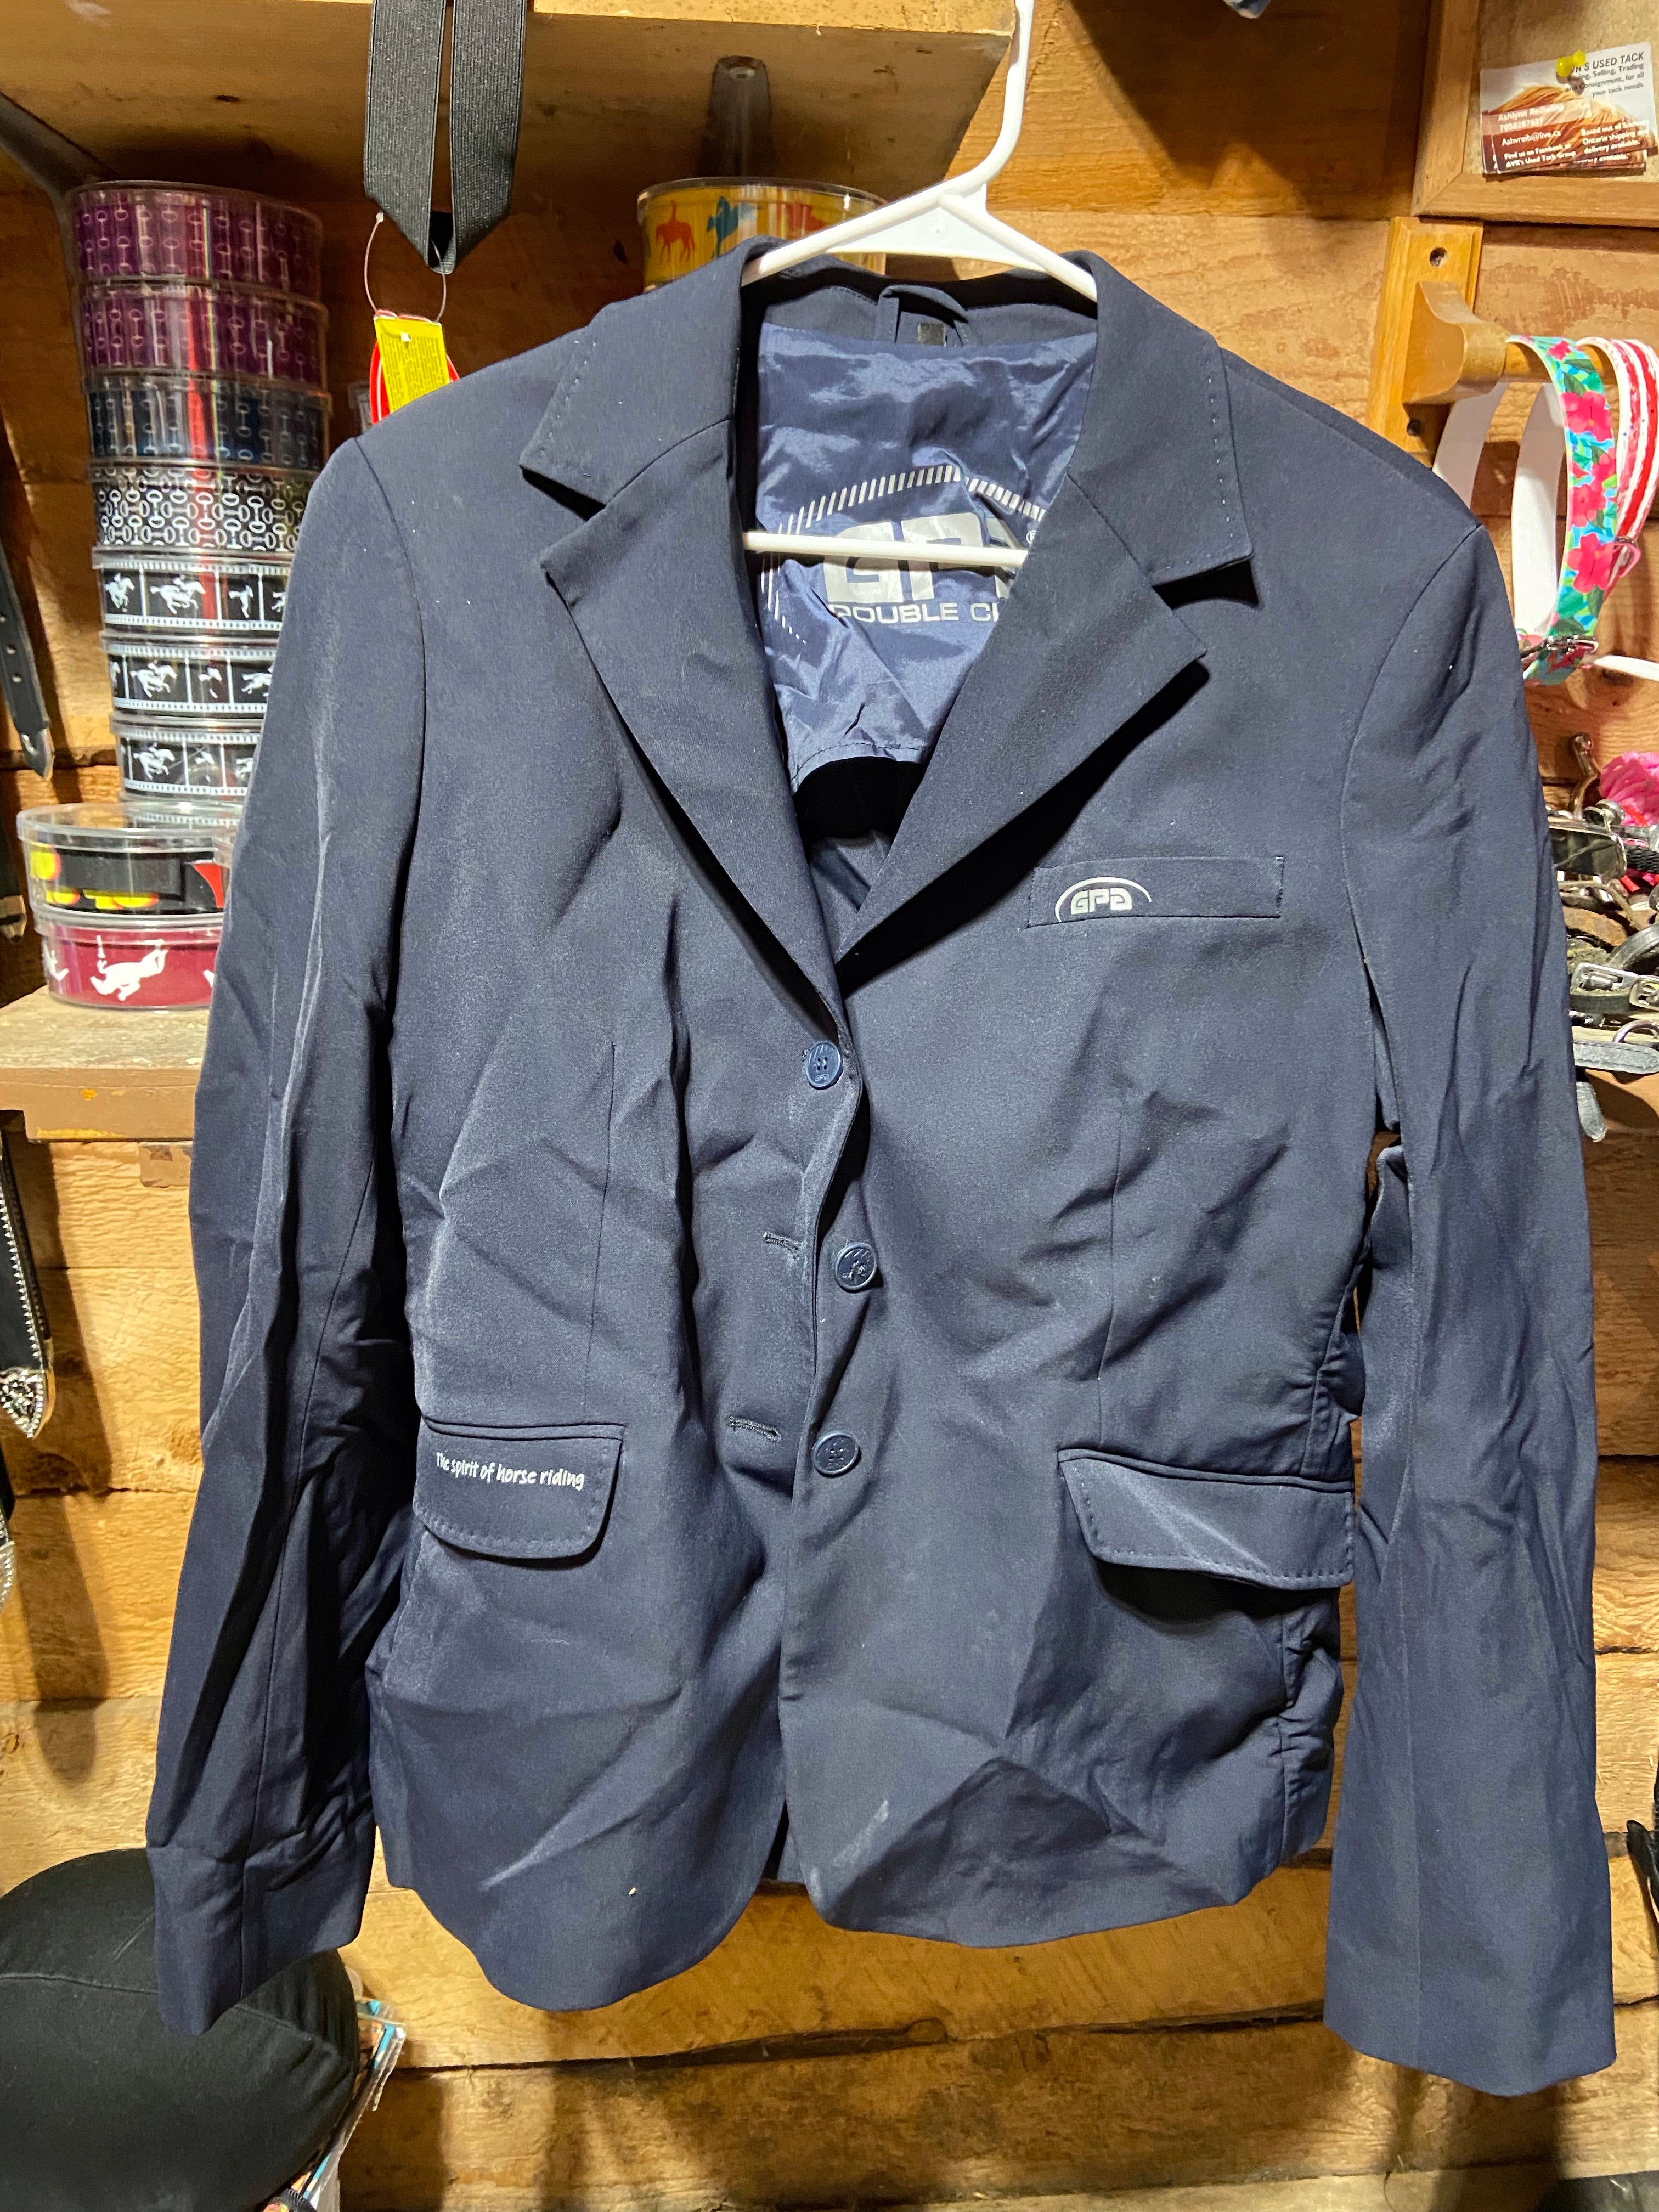 Gpa double clear show jacket size 42 – Avrs Used Tack Shop